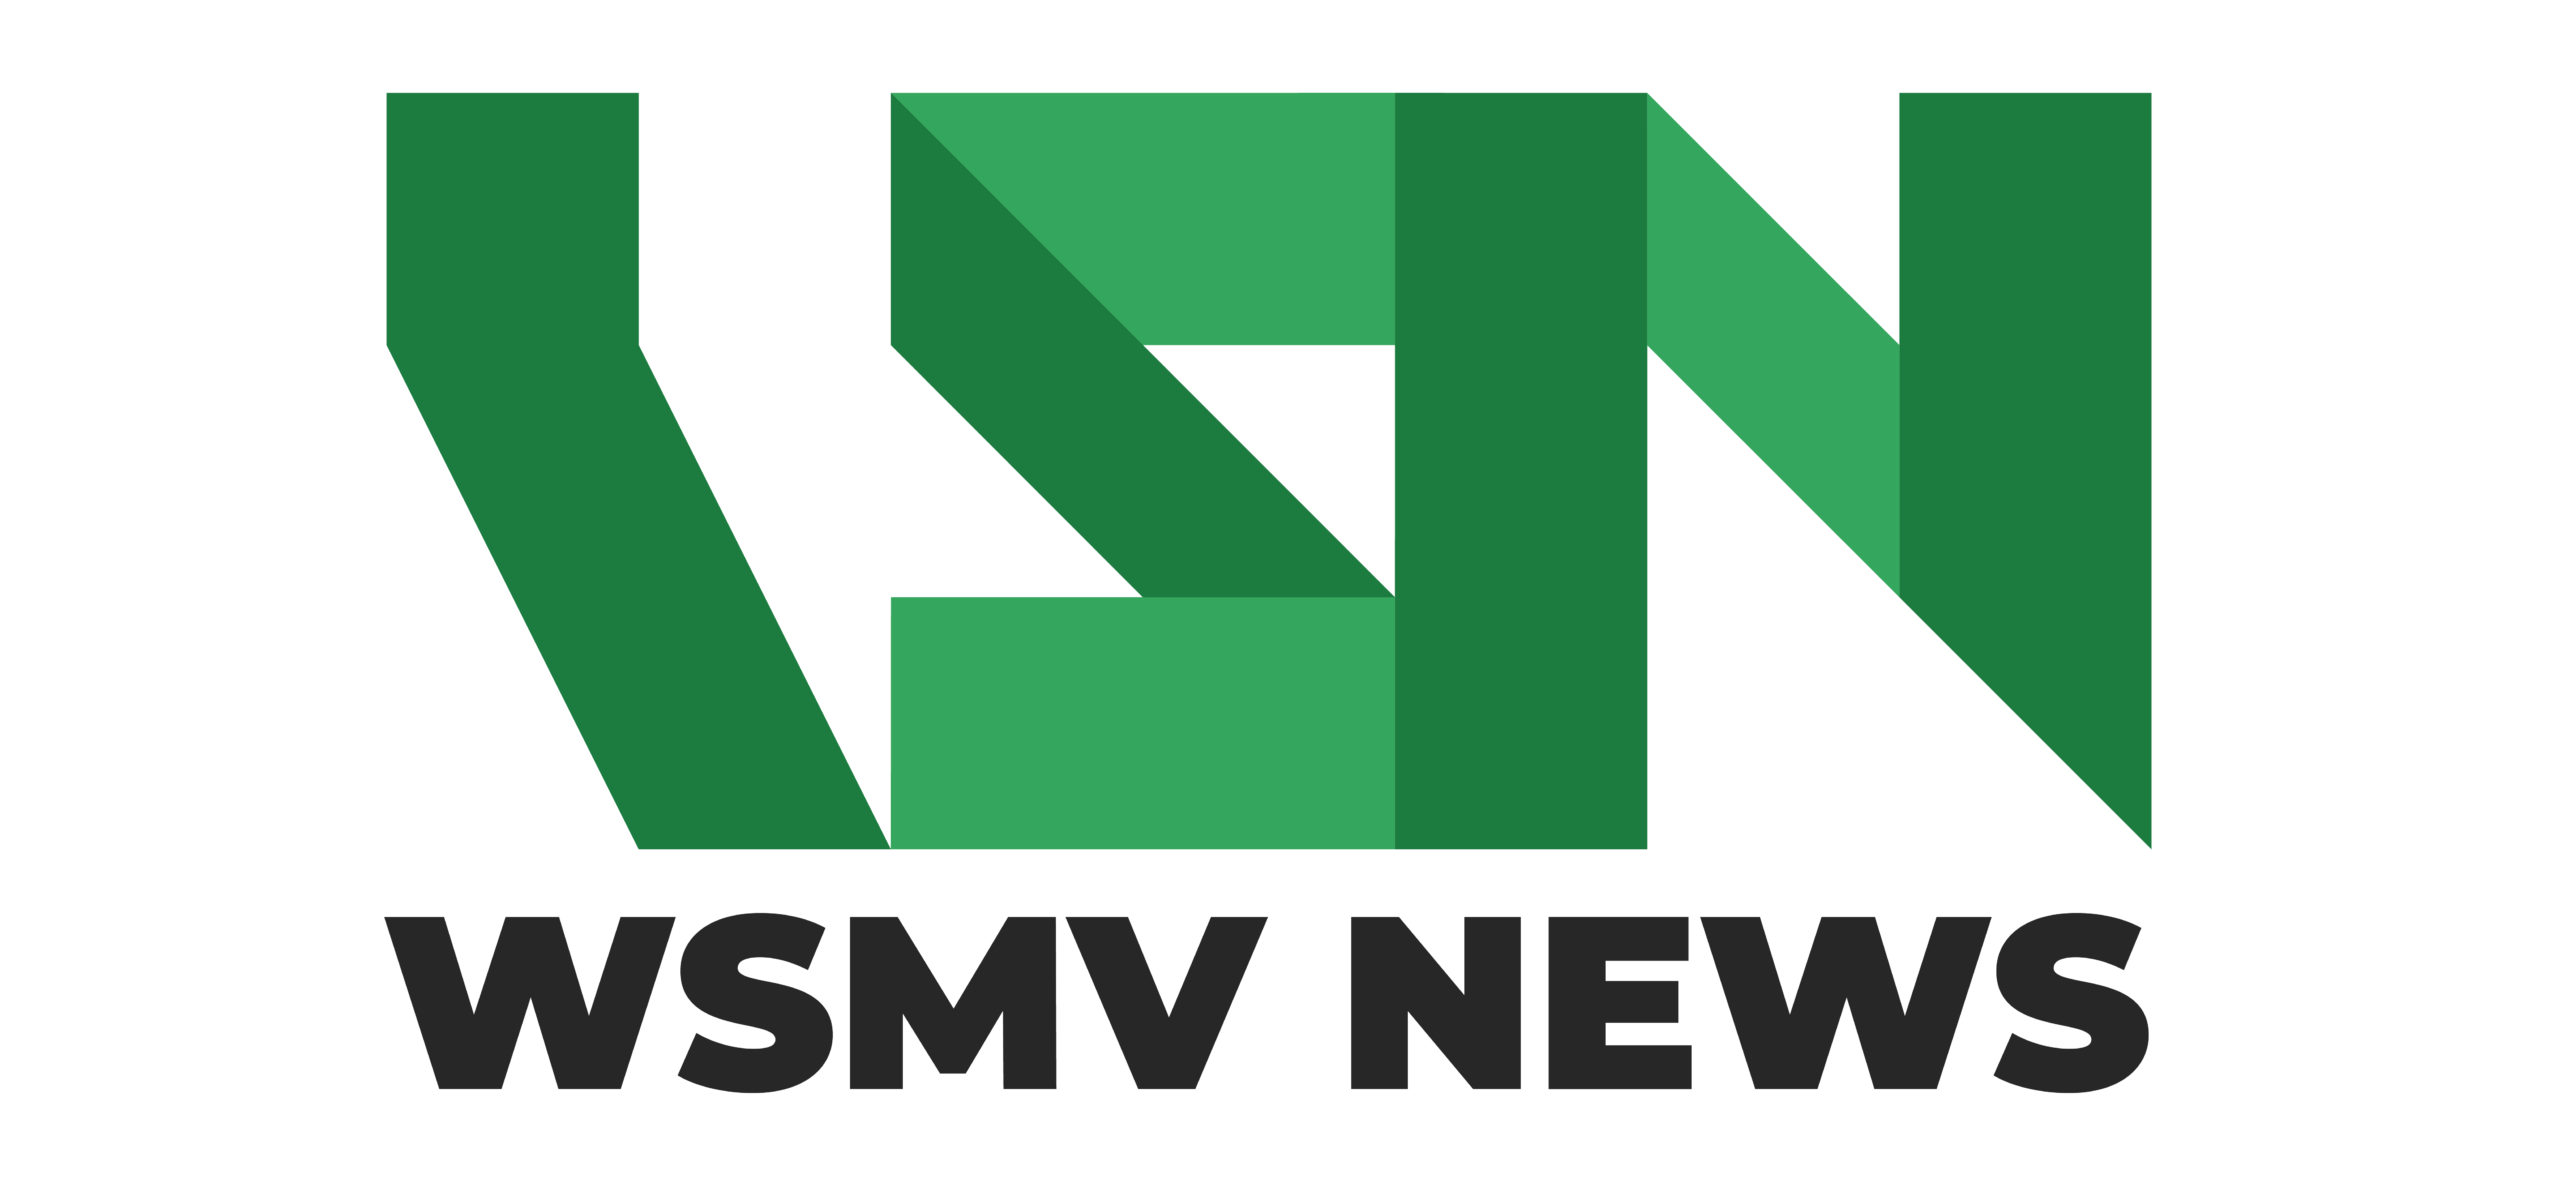 WSMV News